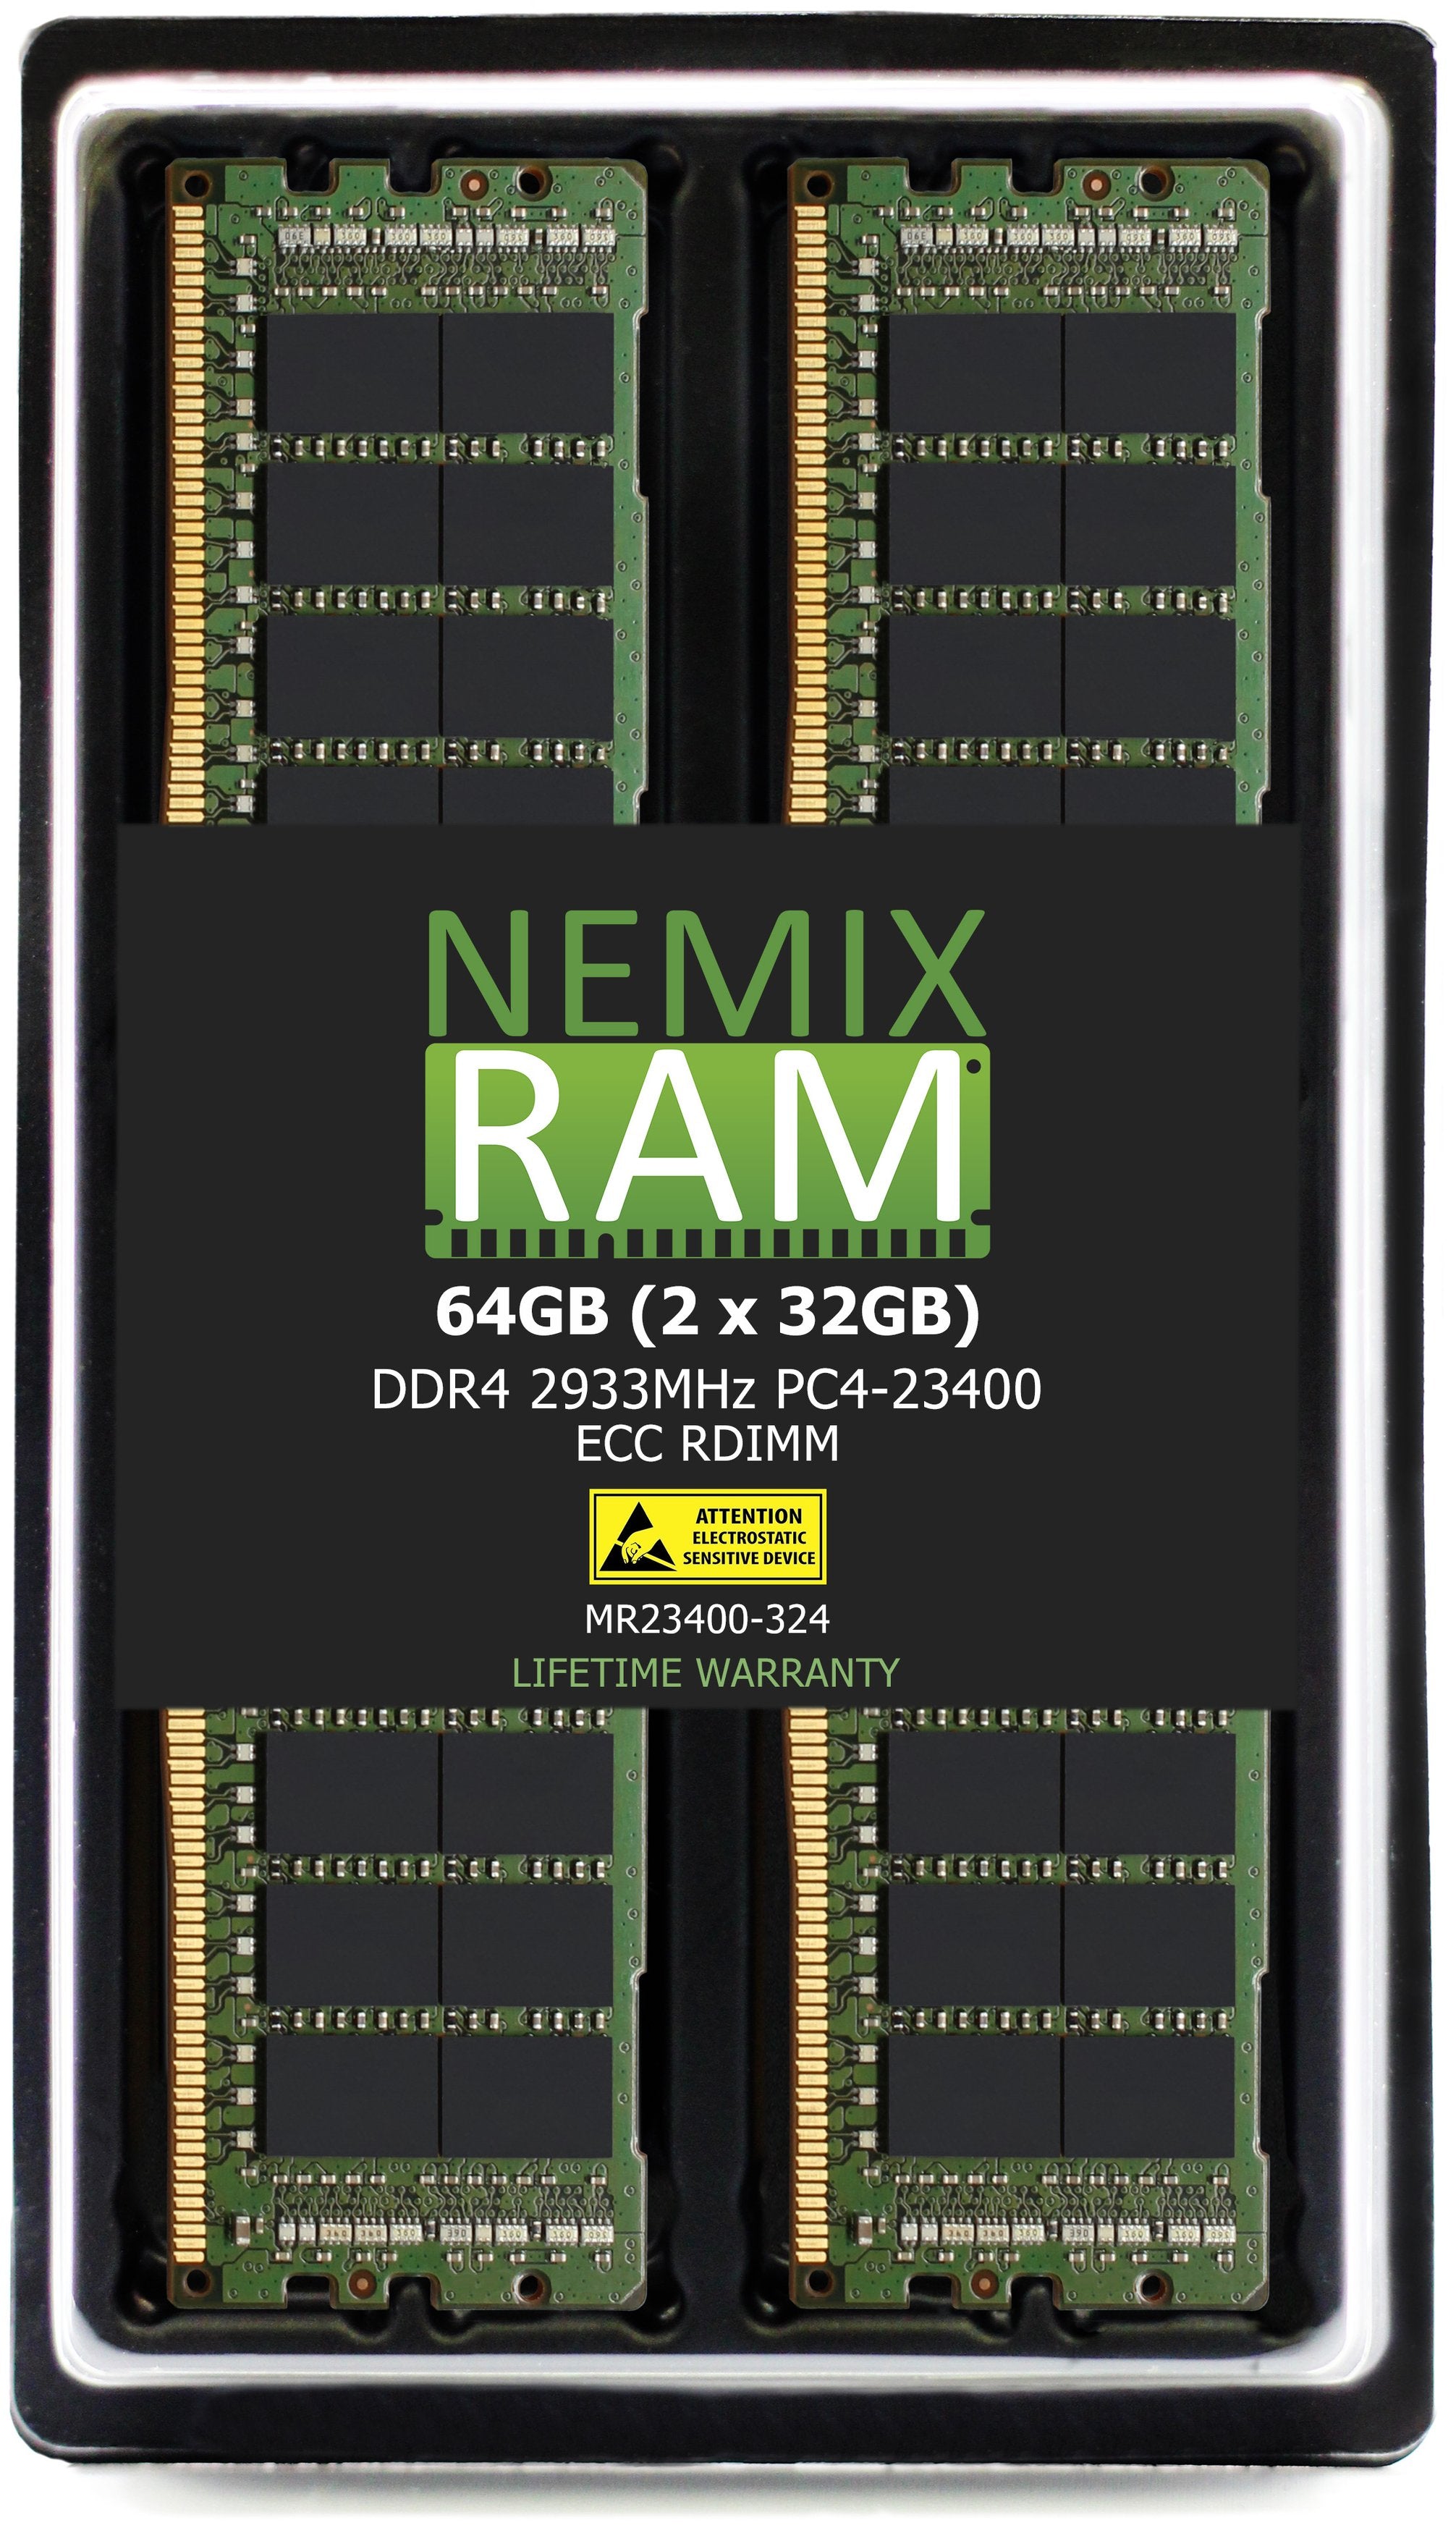 DELL PowerEdge R940xa Memory Upgrade